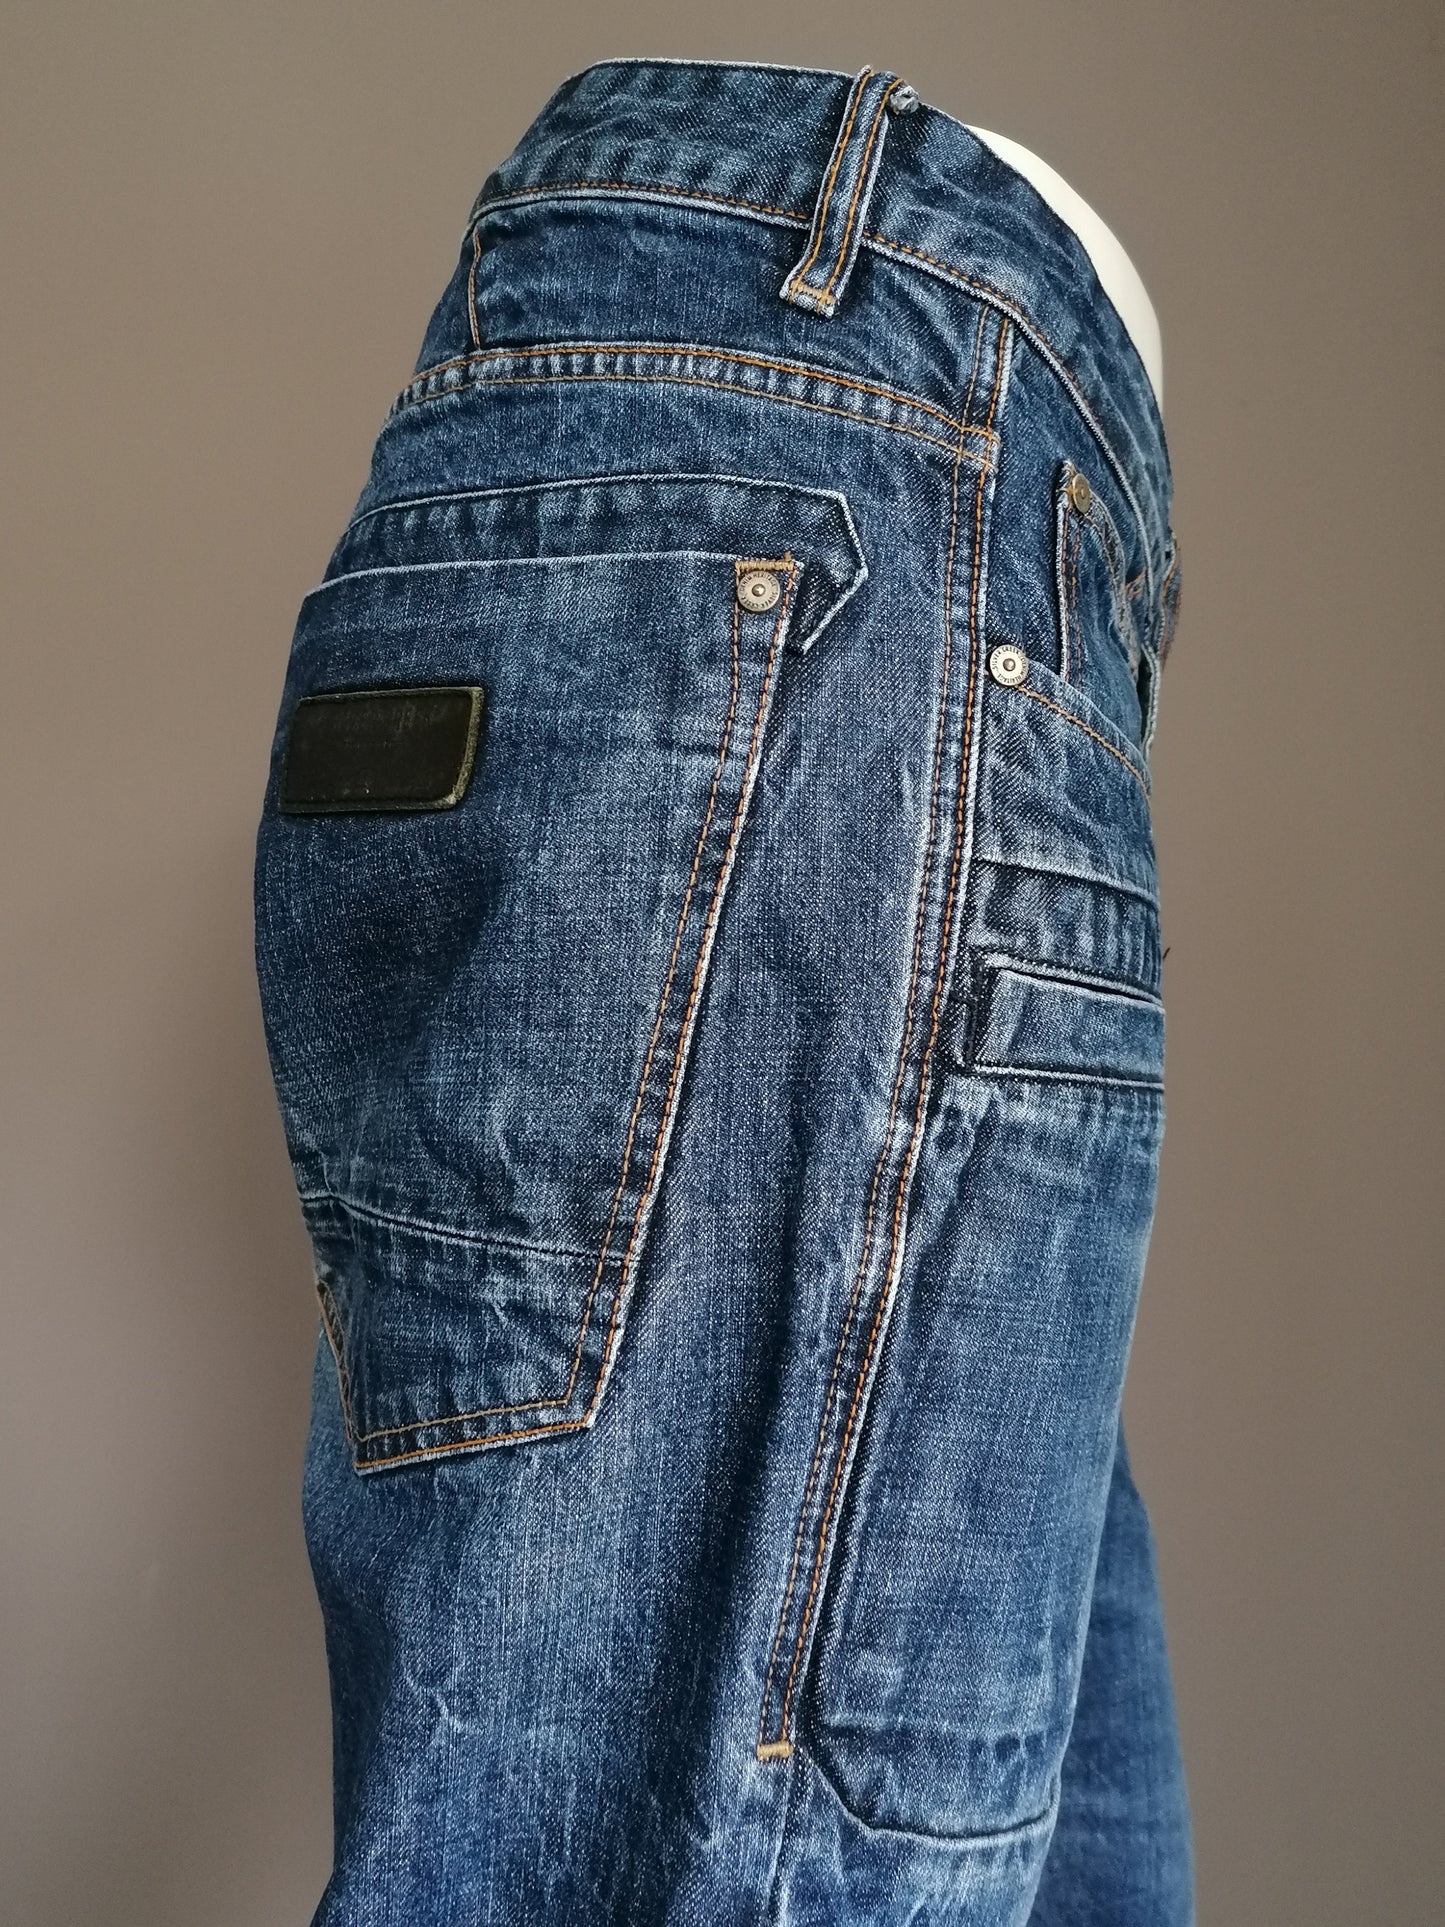 SilverCreek Jeans. Dark blue colored. Size W38 - L34. Carpenter type